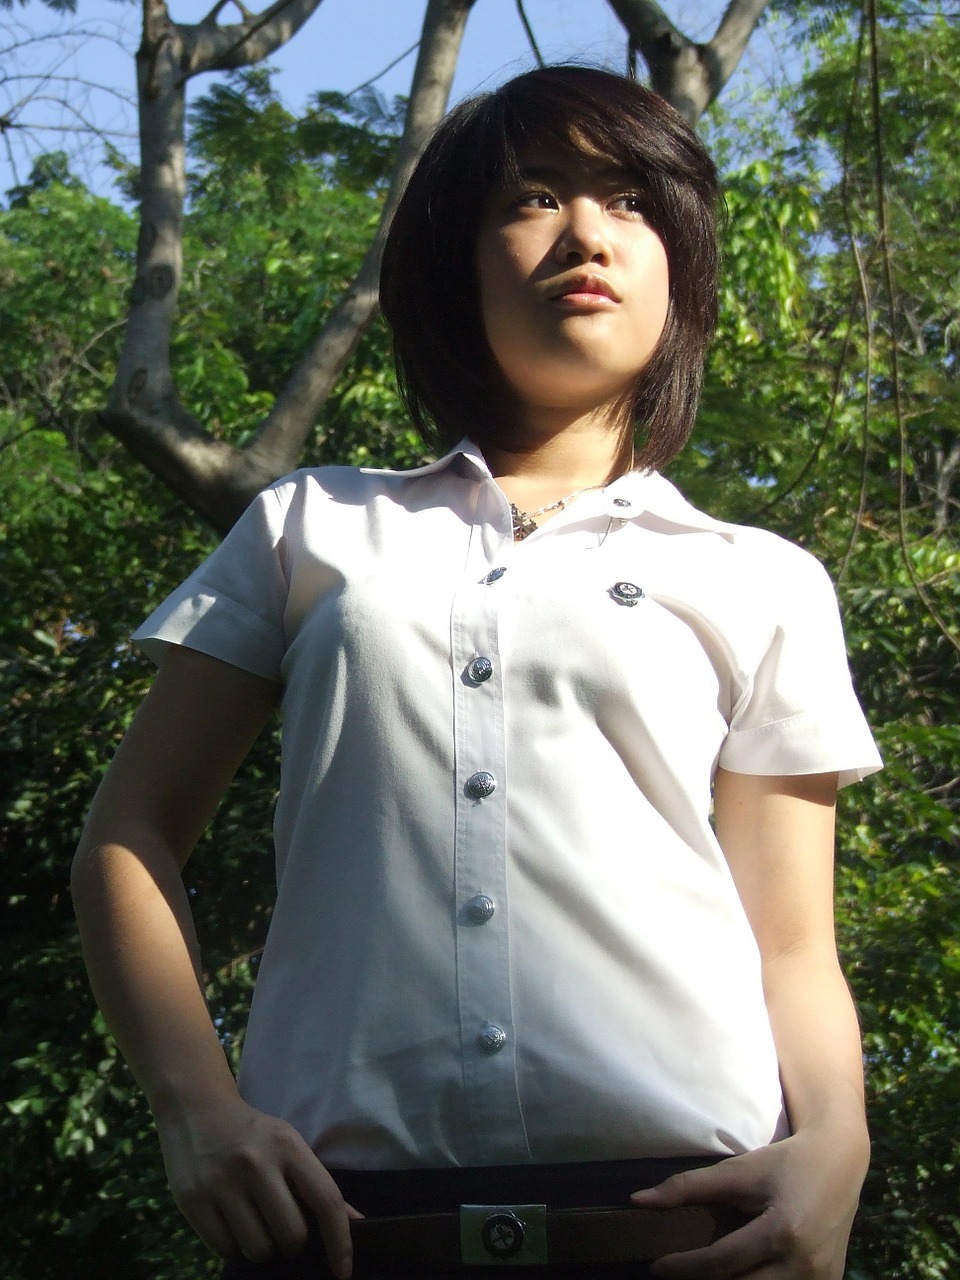 school girl asian girl free photo